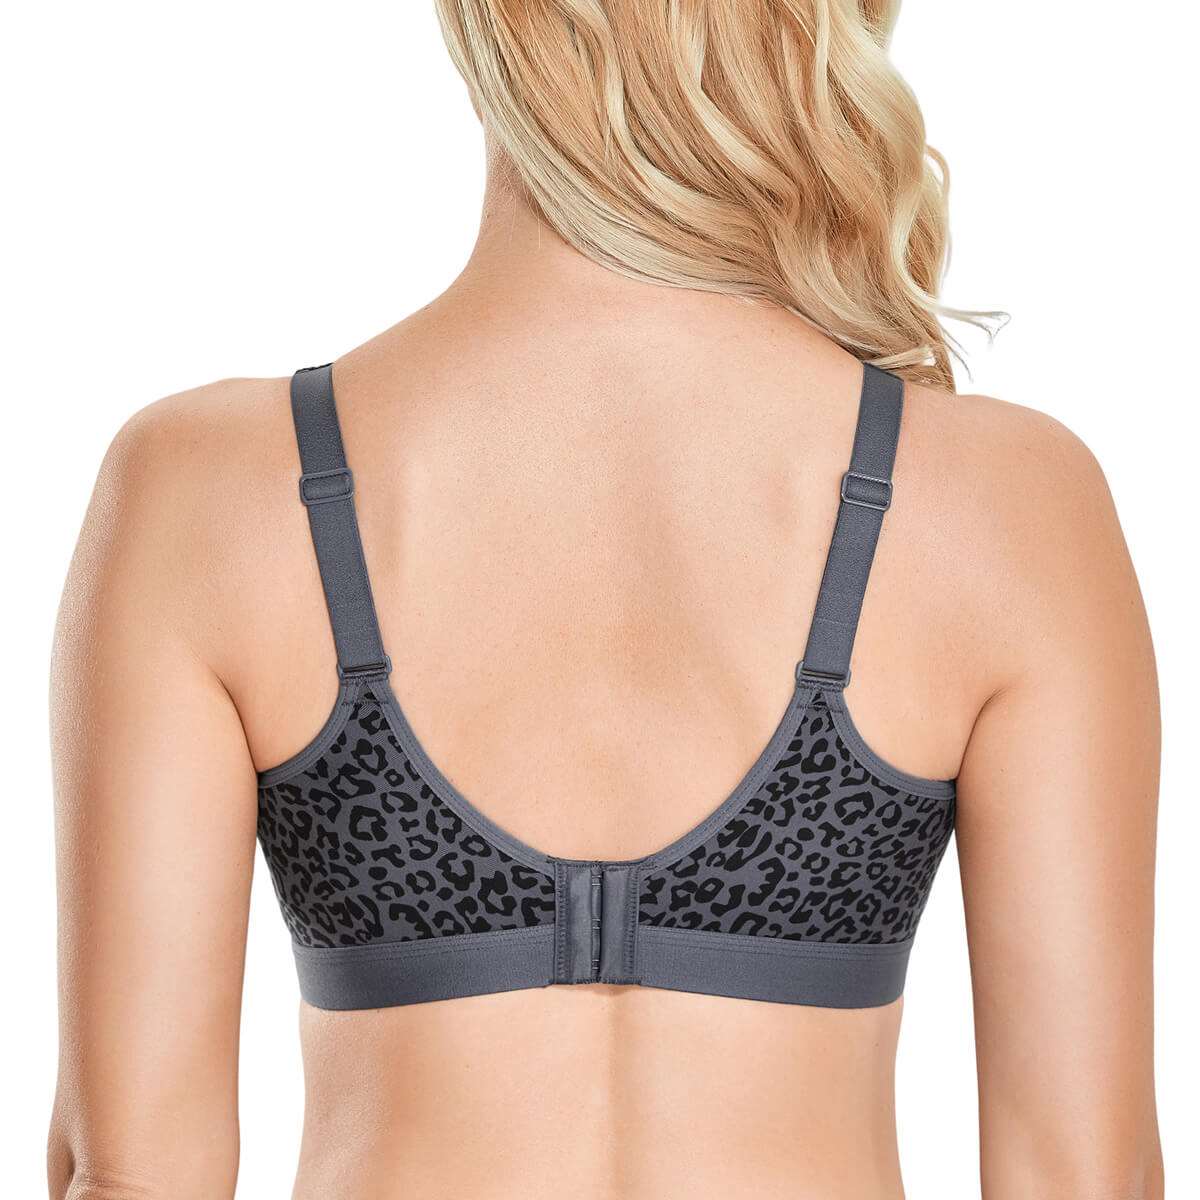 Women's Bra Wirefree Cotton Bra, Sleeping Underwear Soft Cup Plus Size Bra  Full Coverage Bralette (Color : Gray, Size : 48D)